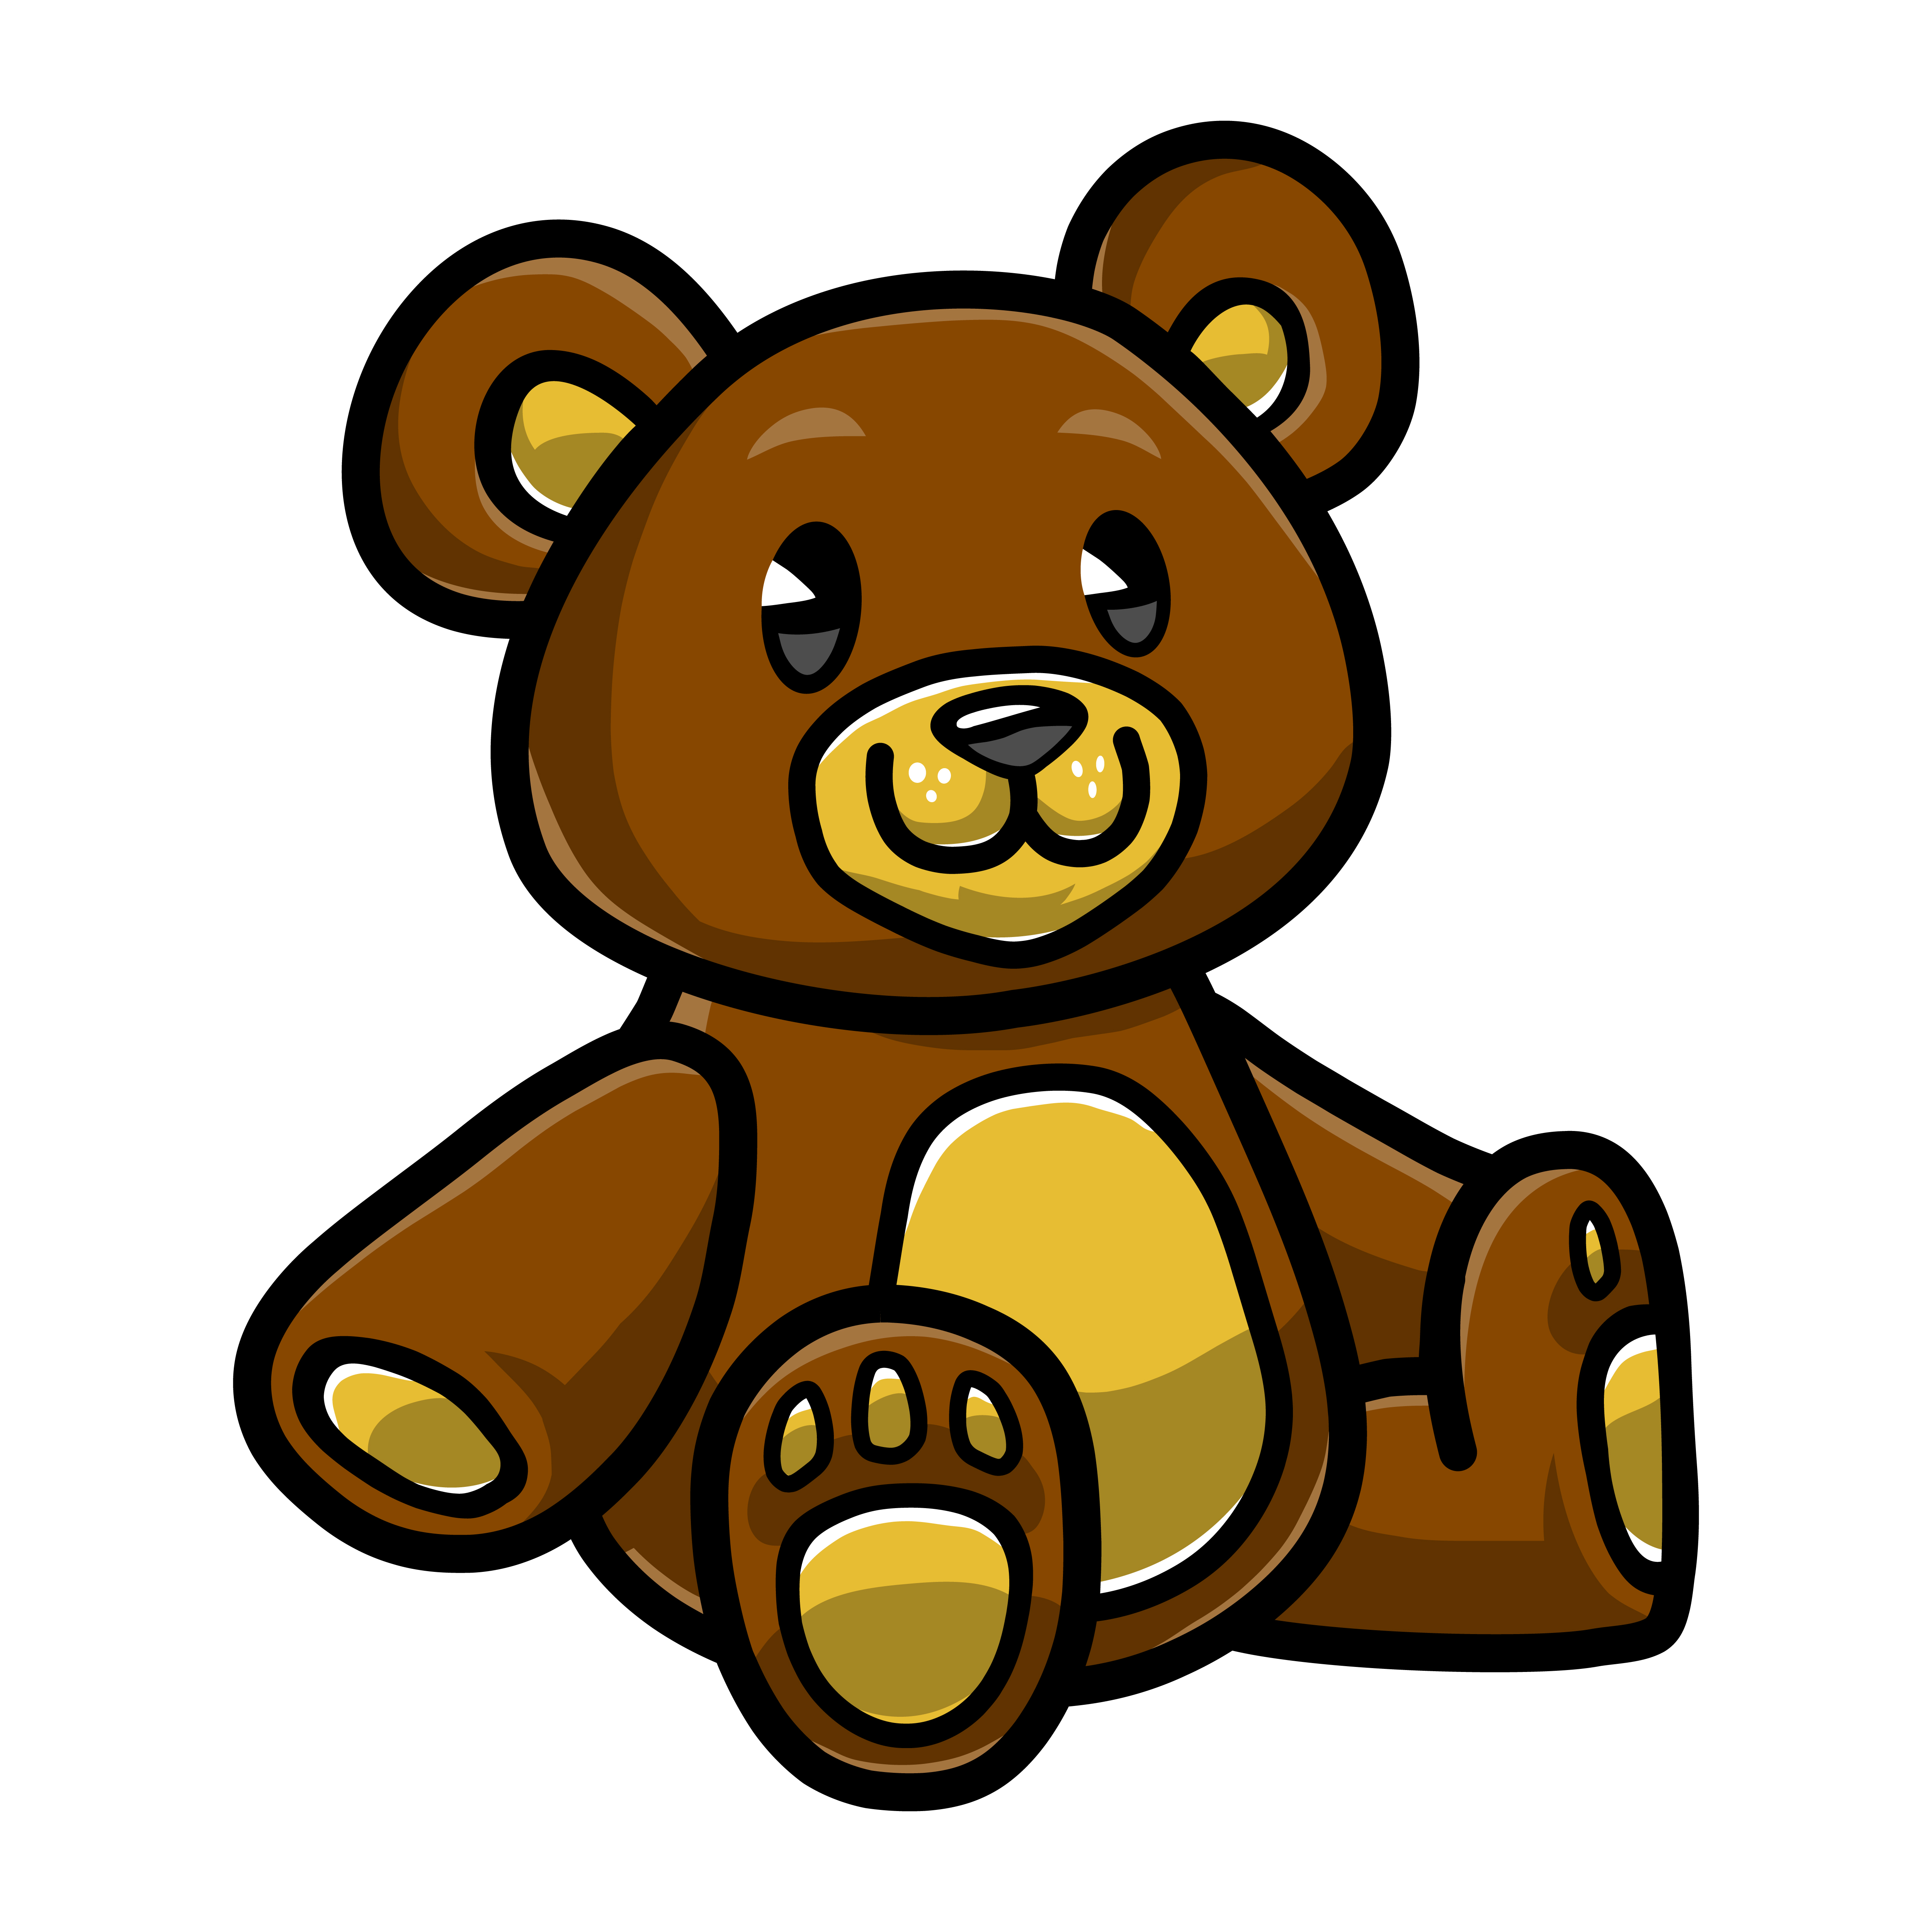 Download Cute Teddy Bear - Download Free Vectors, Clipart Graphics ...